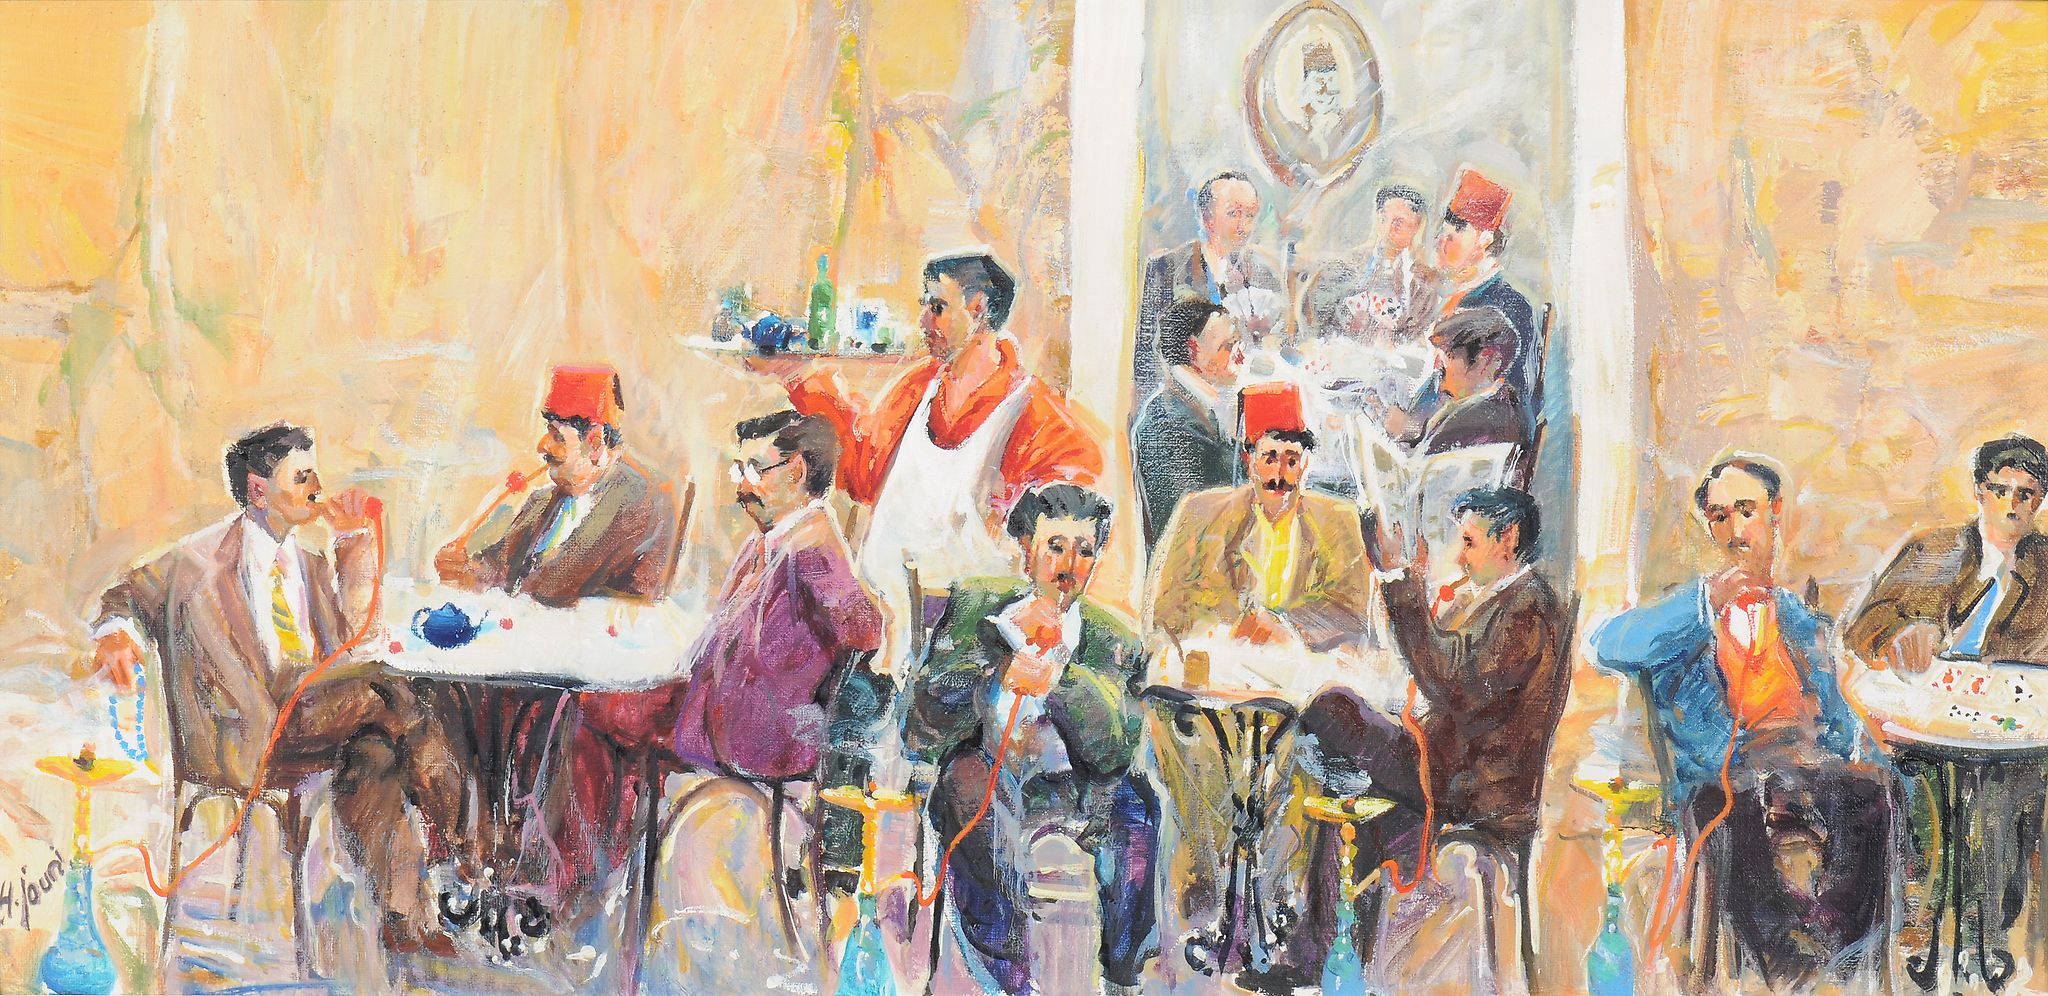 Hassan Jouni (Lebanese b. 1942), Cafe scene,